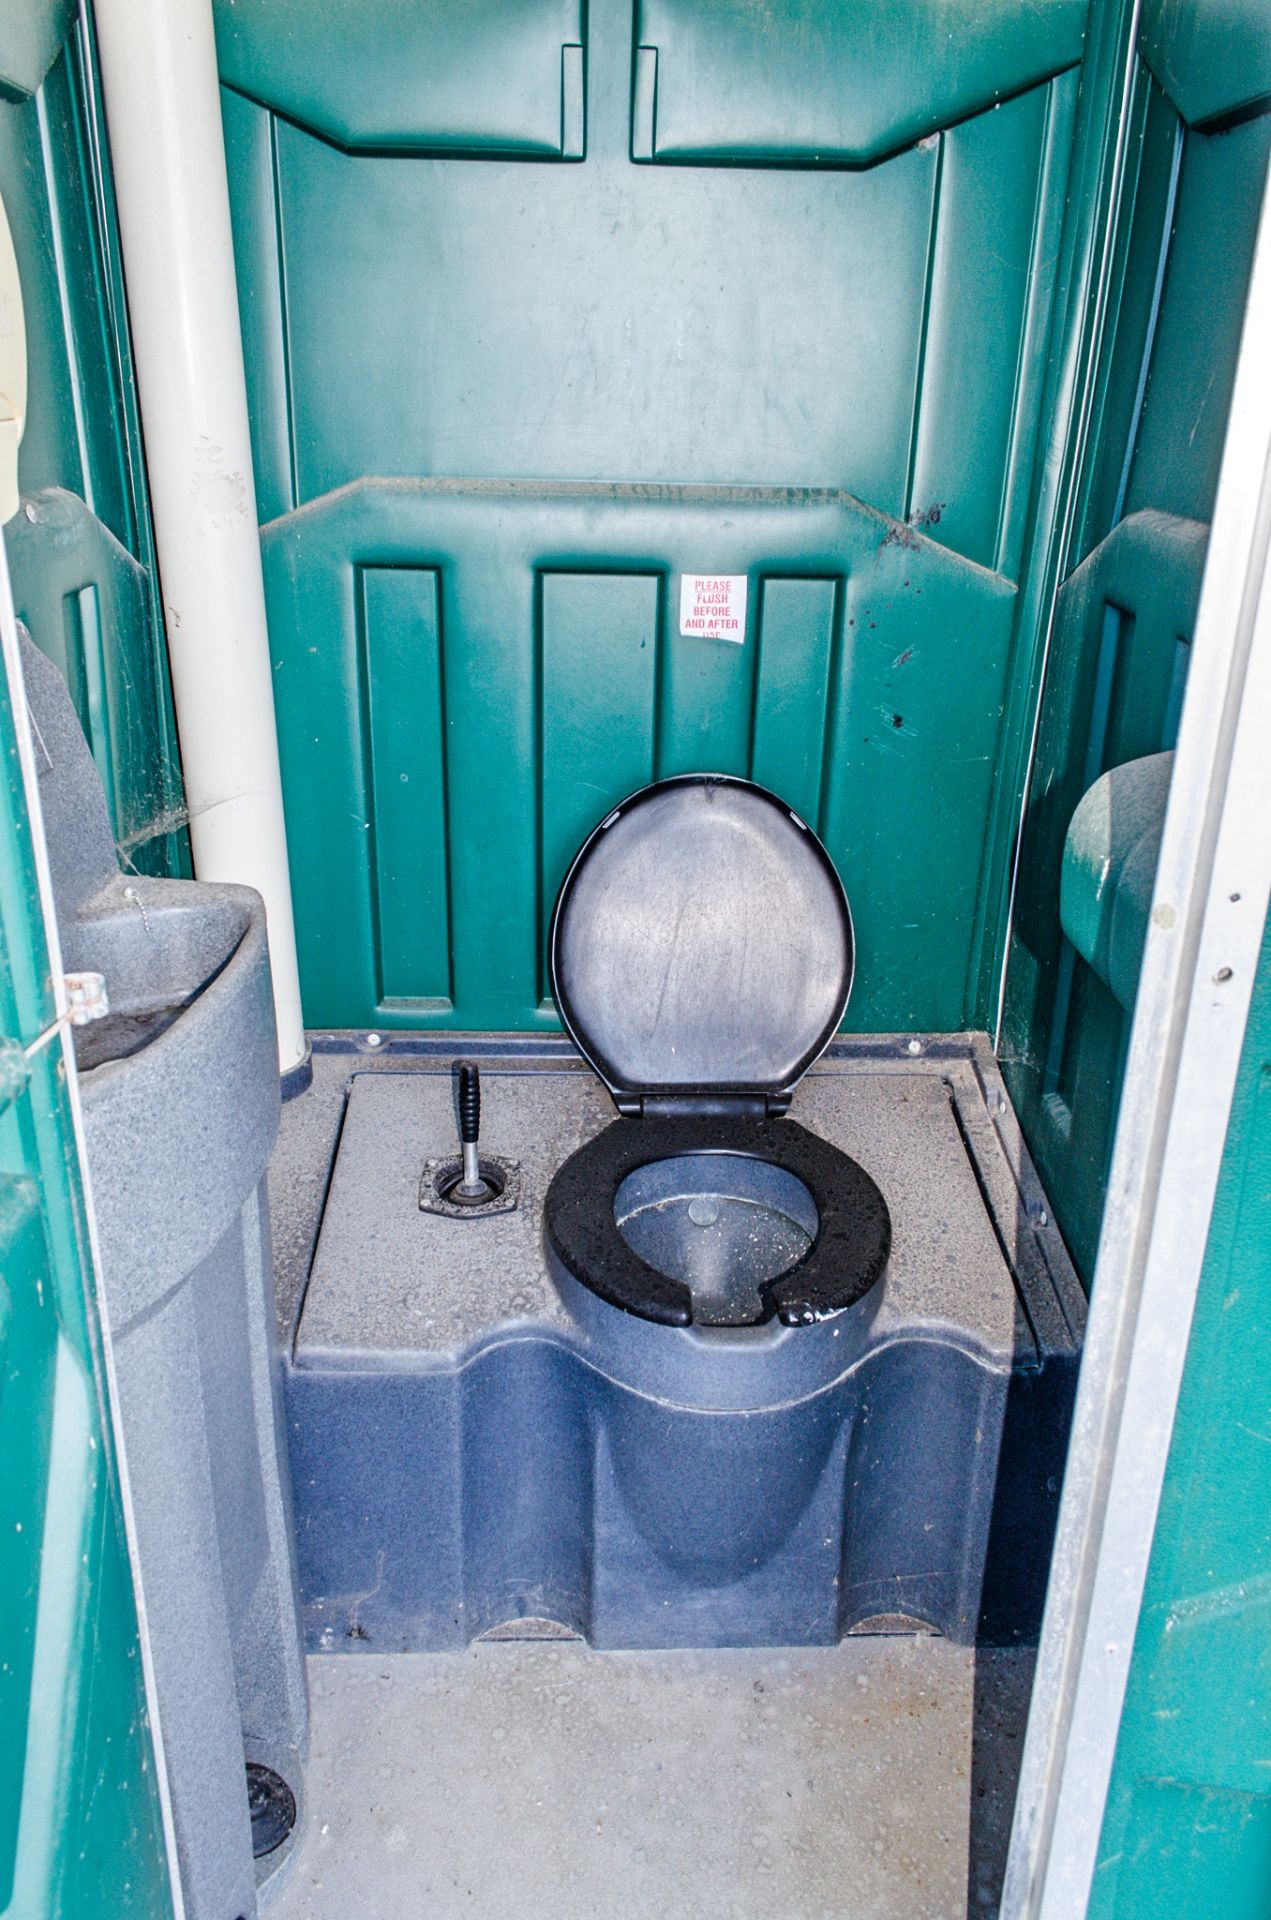 Plastic portable toilet - Image 2 of 2